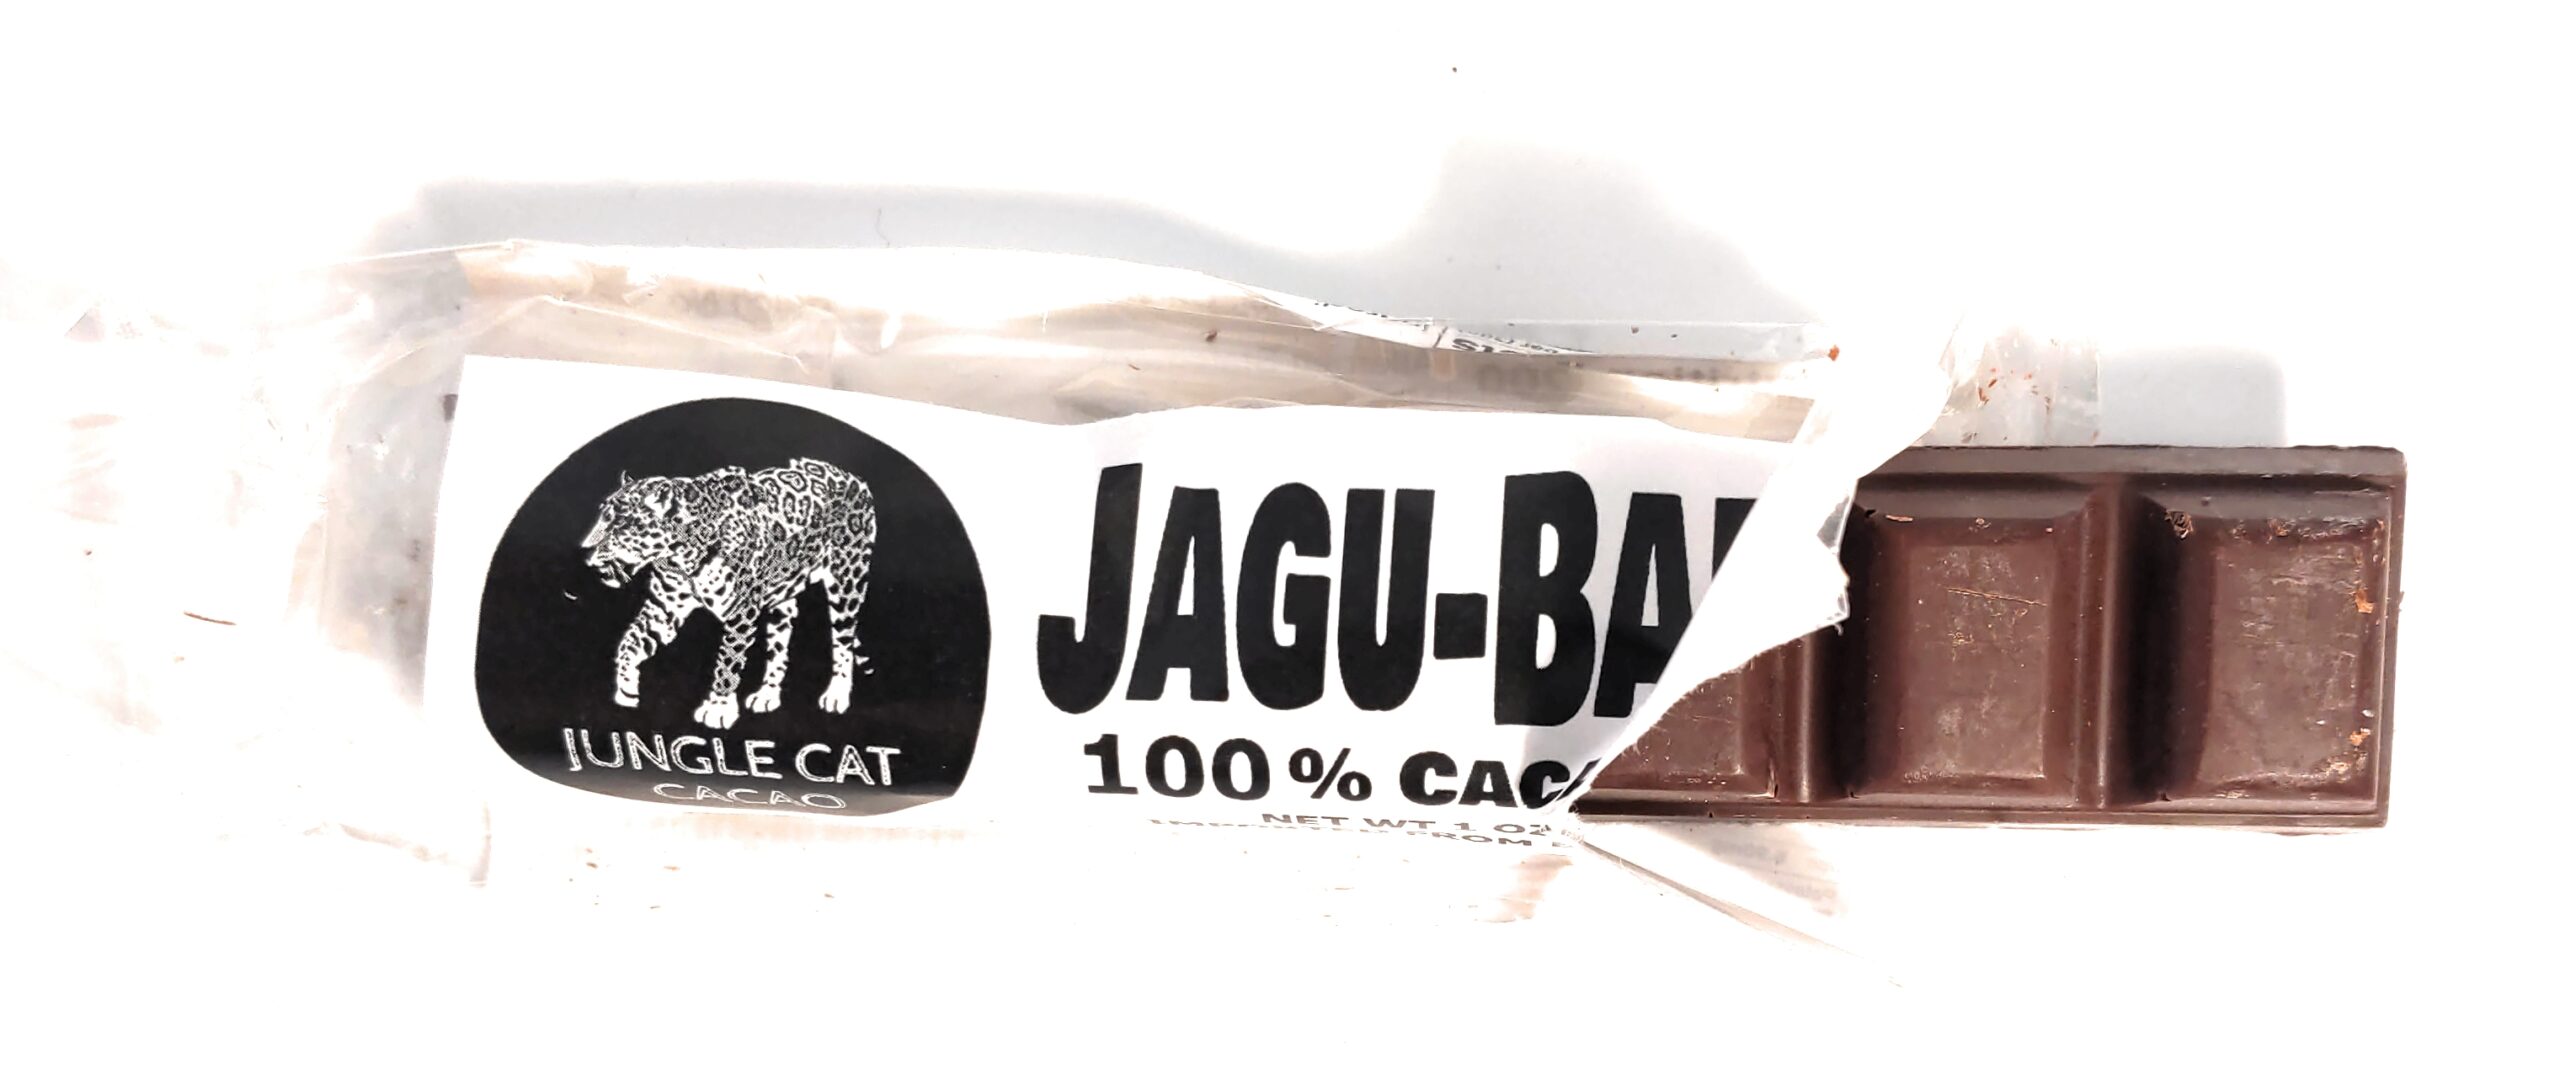 Jagu-Bar 100% Cacao Belizean Chocolate Bar